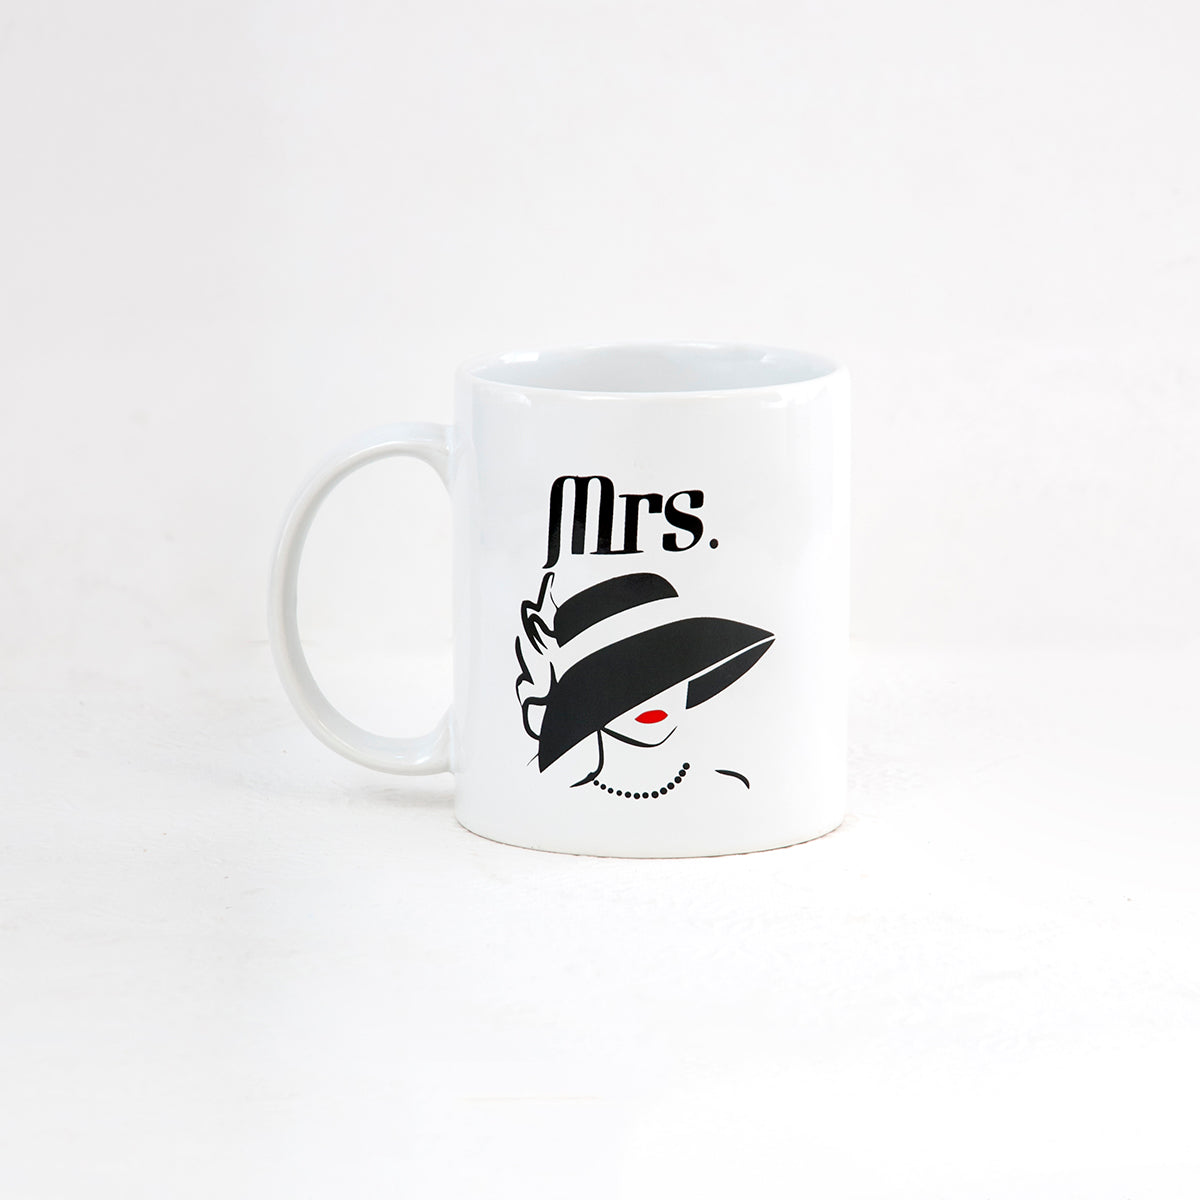 Swiss Coffee Mug, 1 piece, 300ml, Mr.